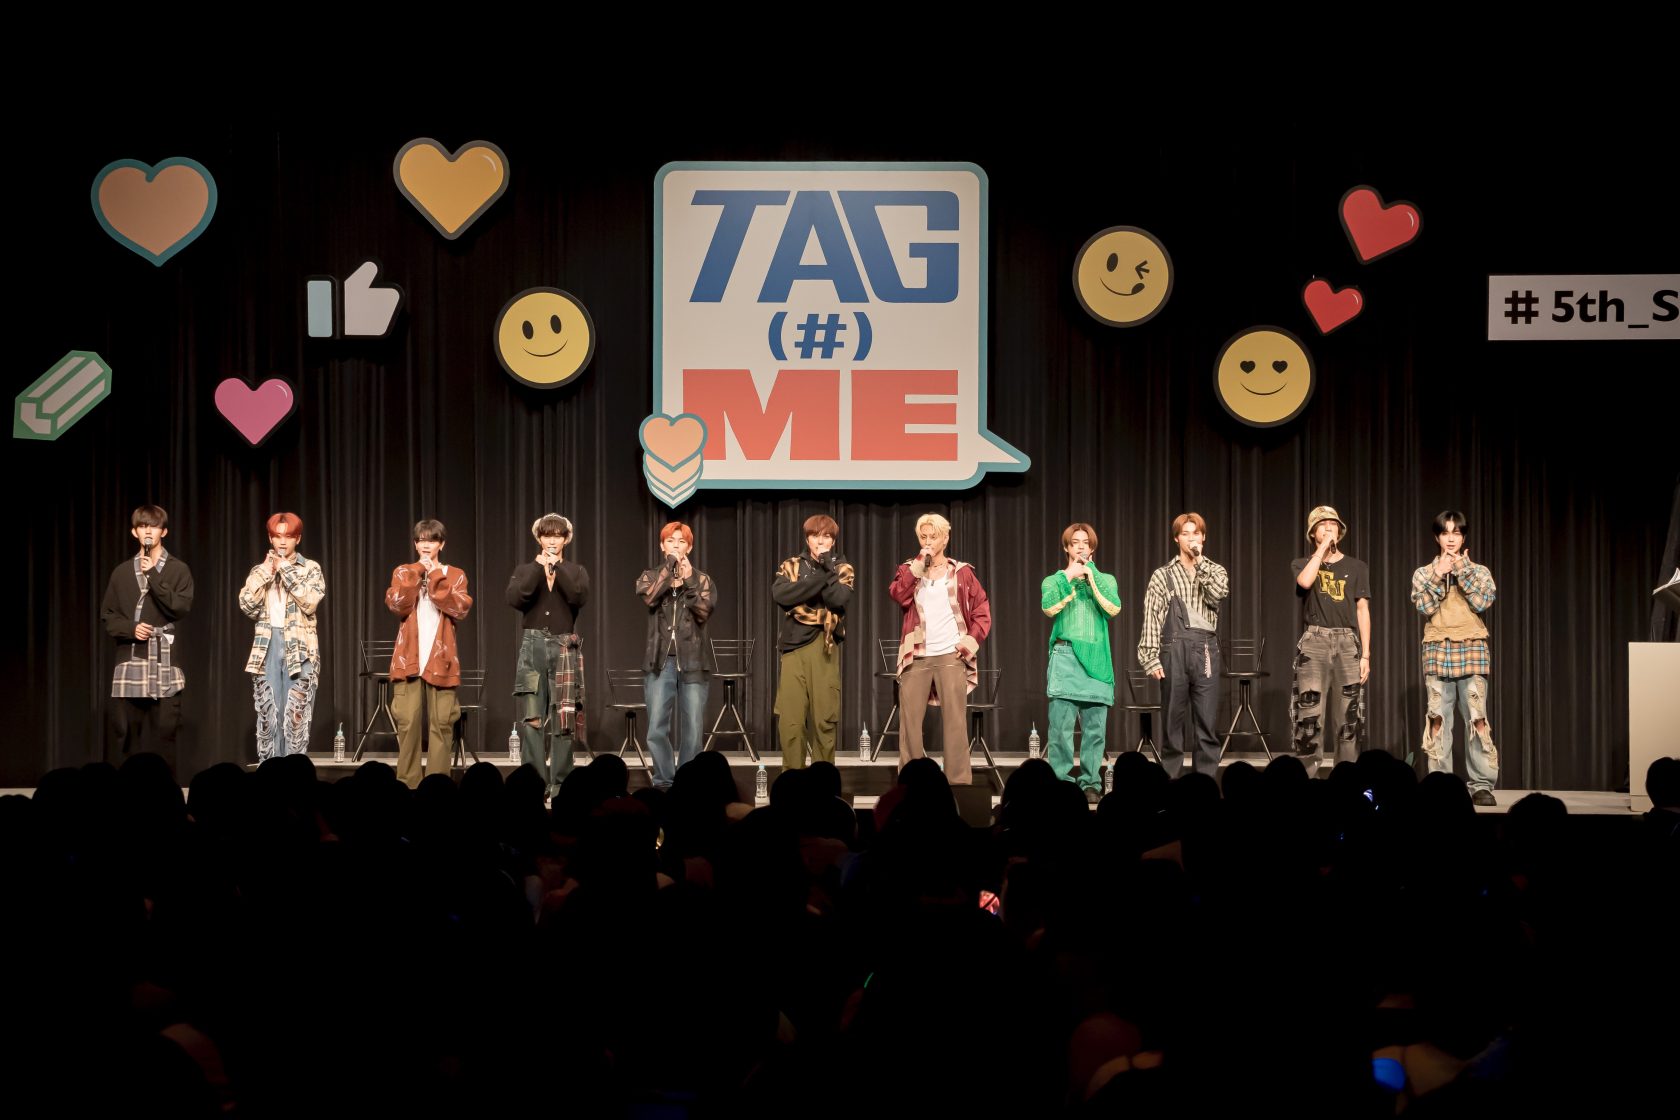 INI 5THシングル「TAG ME」のプレミアムイベントを開催 メンバー同士がゲームで大盛り上がり